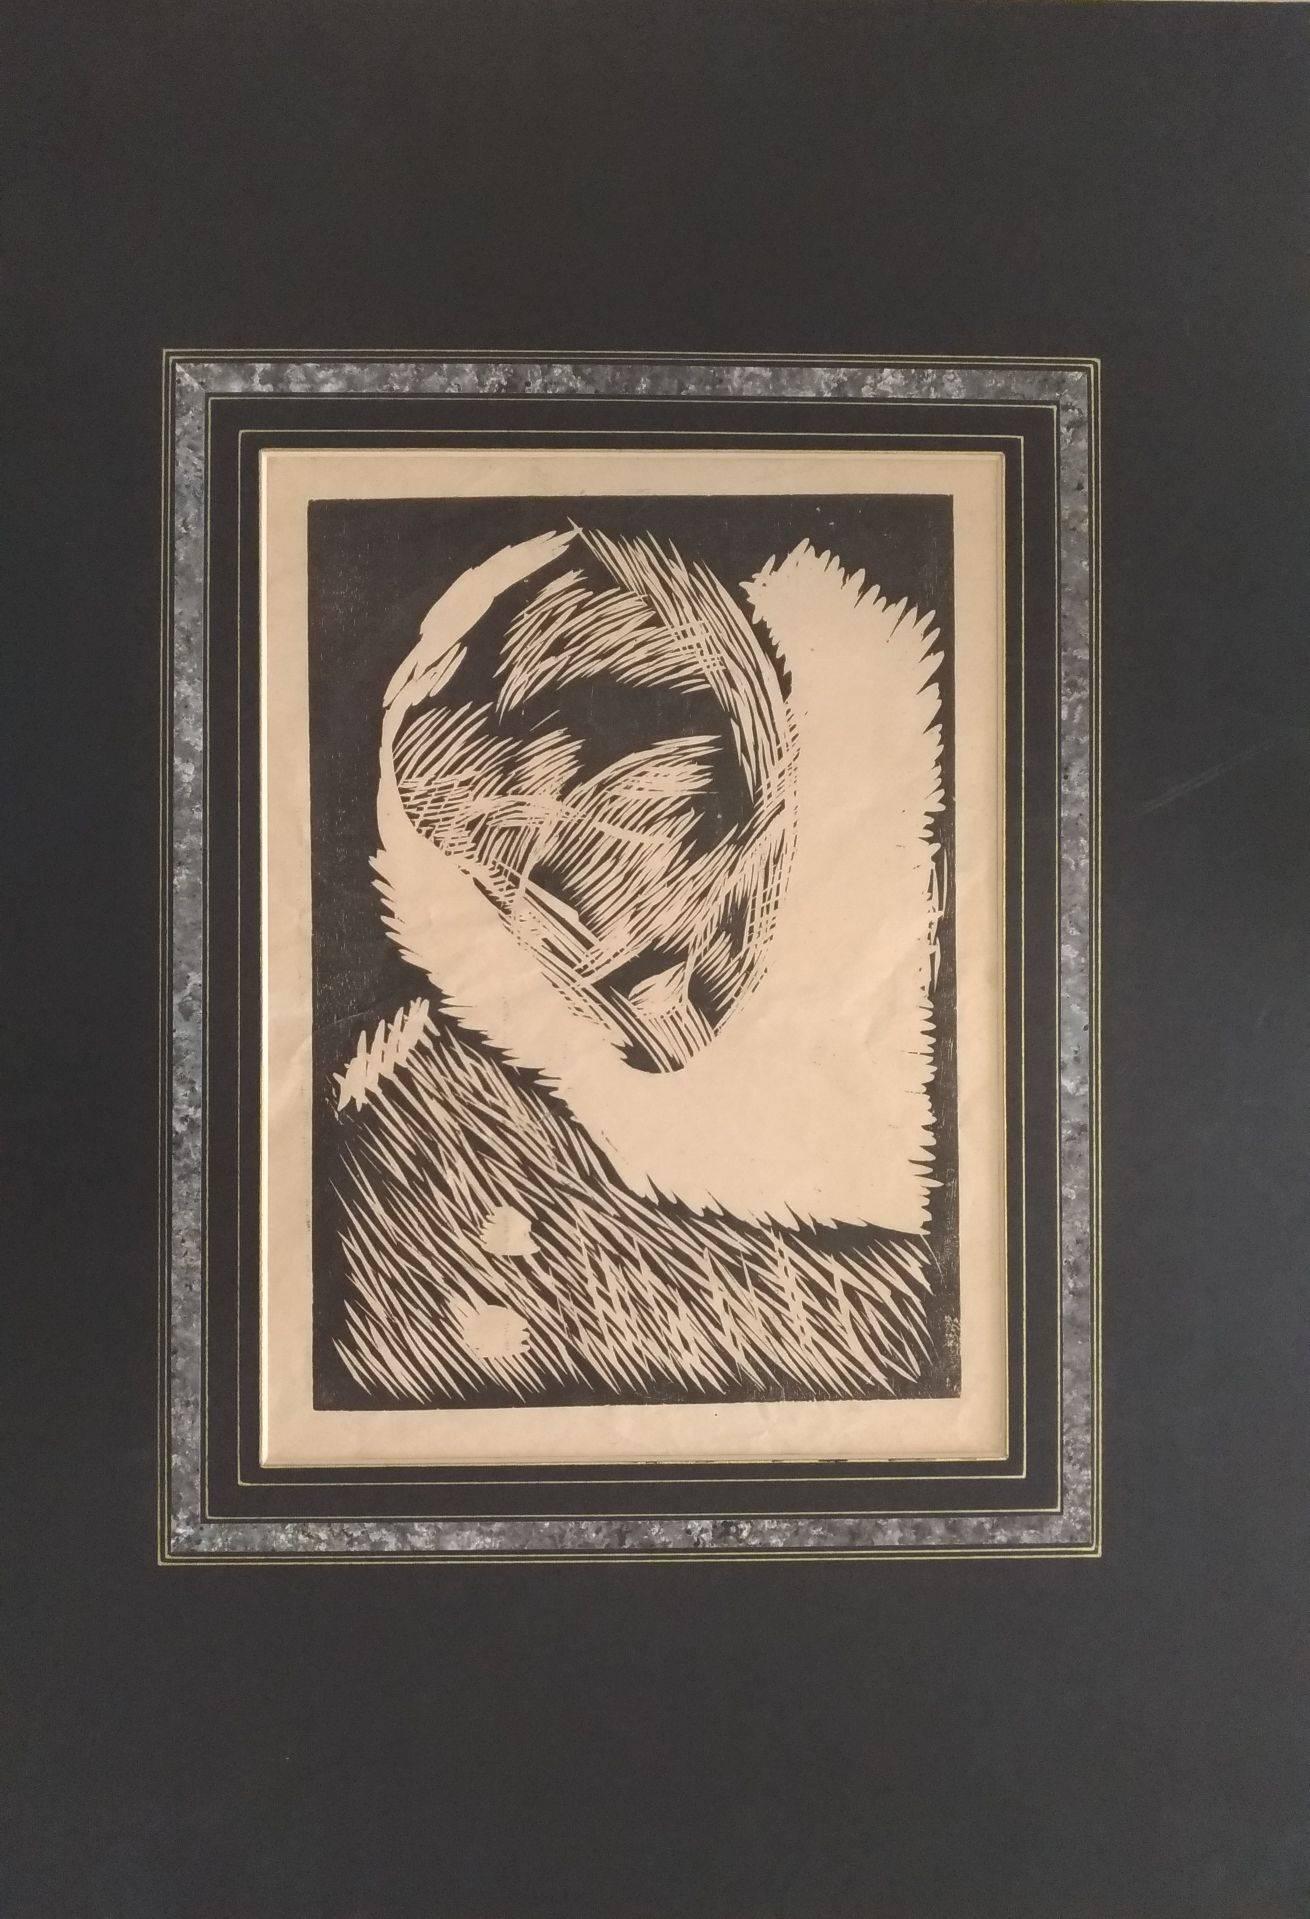 Arturo Martini Abstract Print - Simulacrum of Pierrot